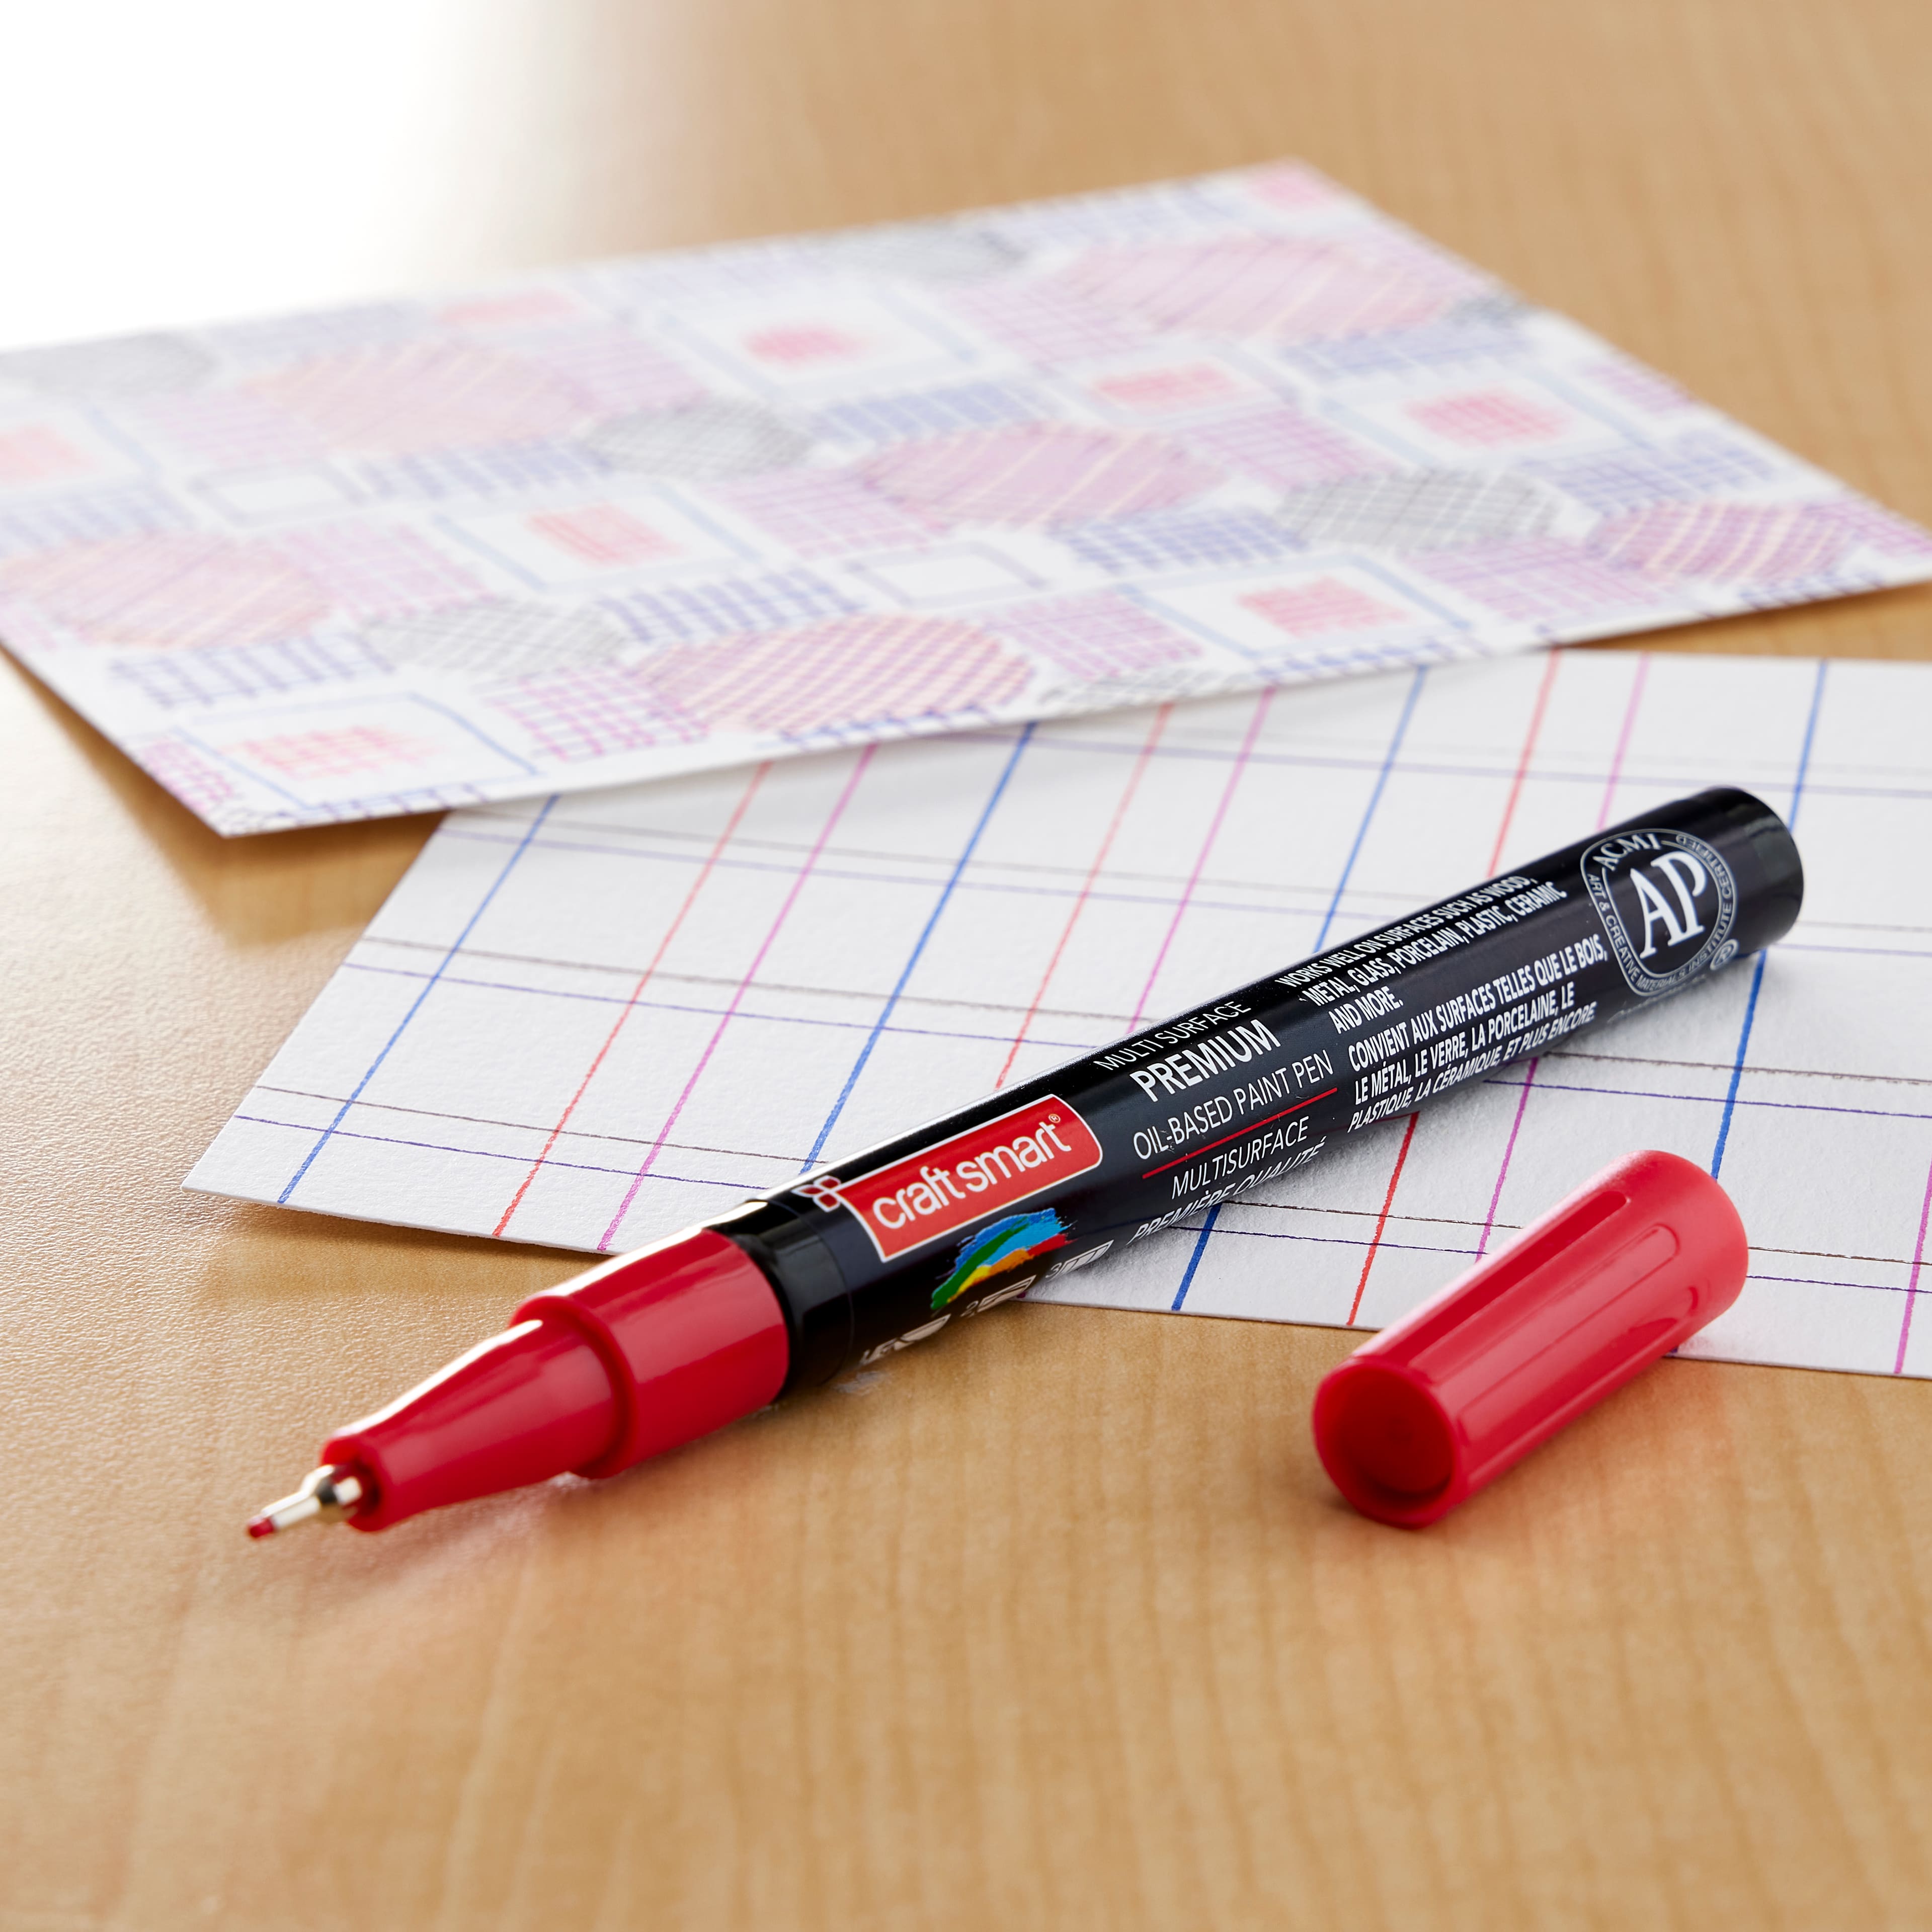 Craft Smart Glitter Medium Tip Multi-Surface Premium Paint Pen - Each